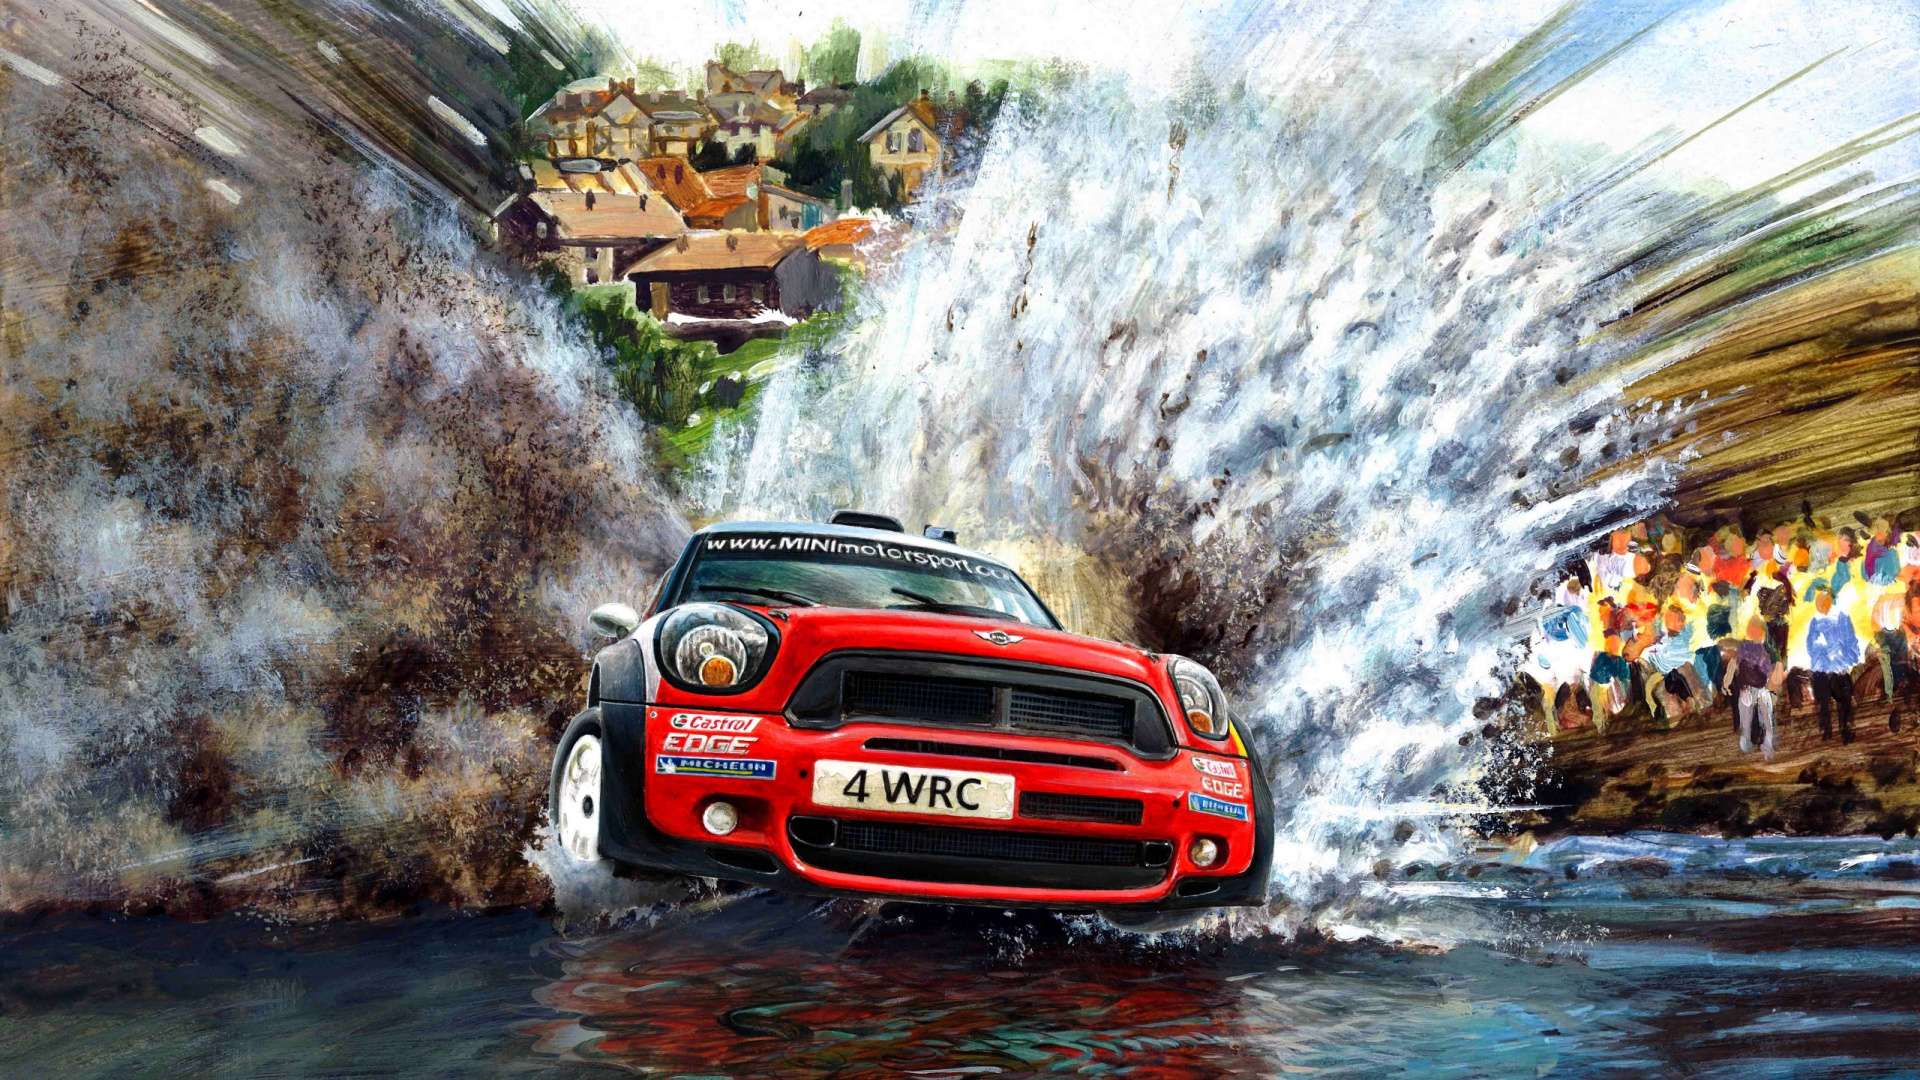 Download Mini Cooper rallying water splashes race artwork